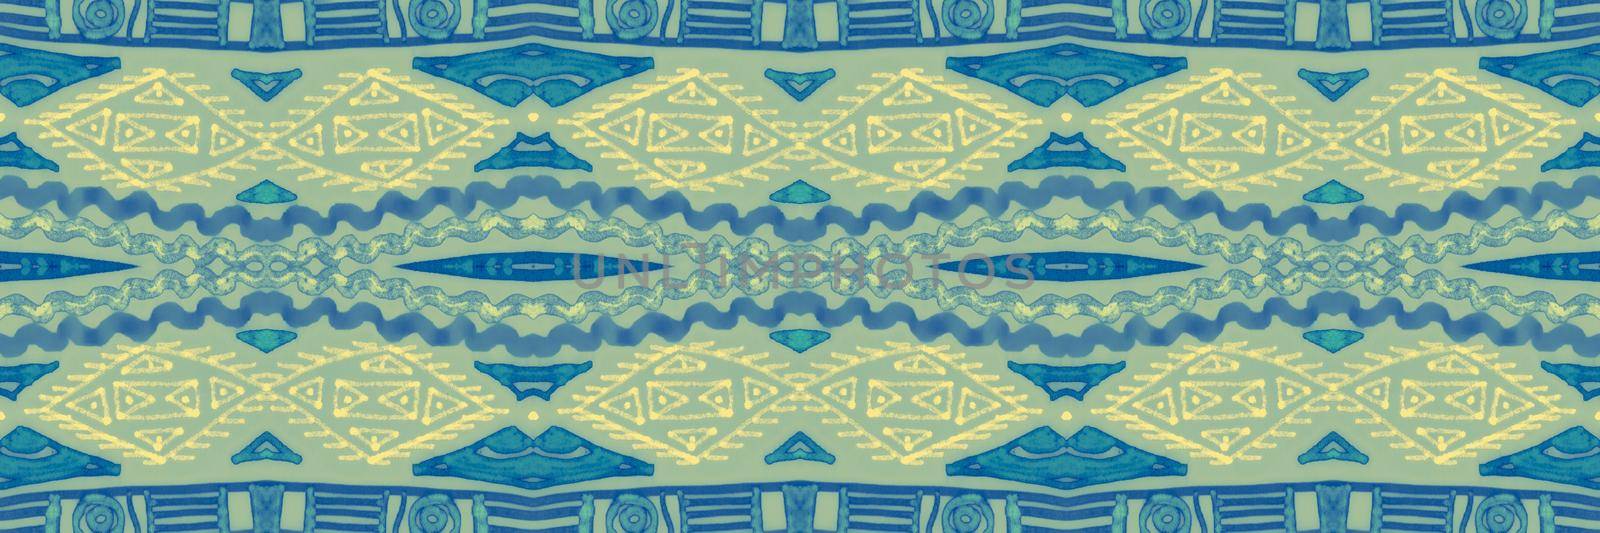 Geometric ethnic print. Grunge navajo ornament. by YASNARADA